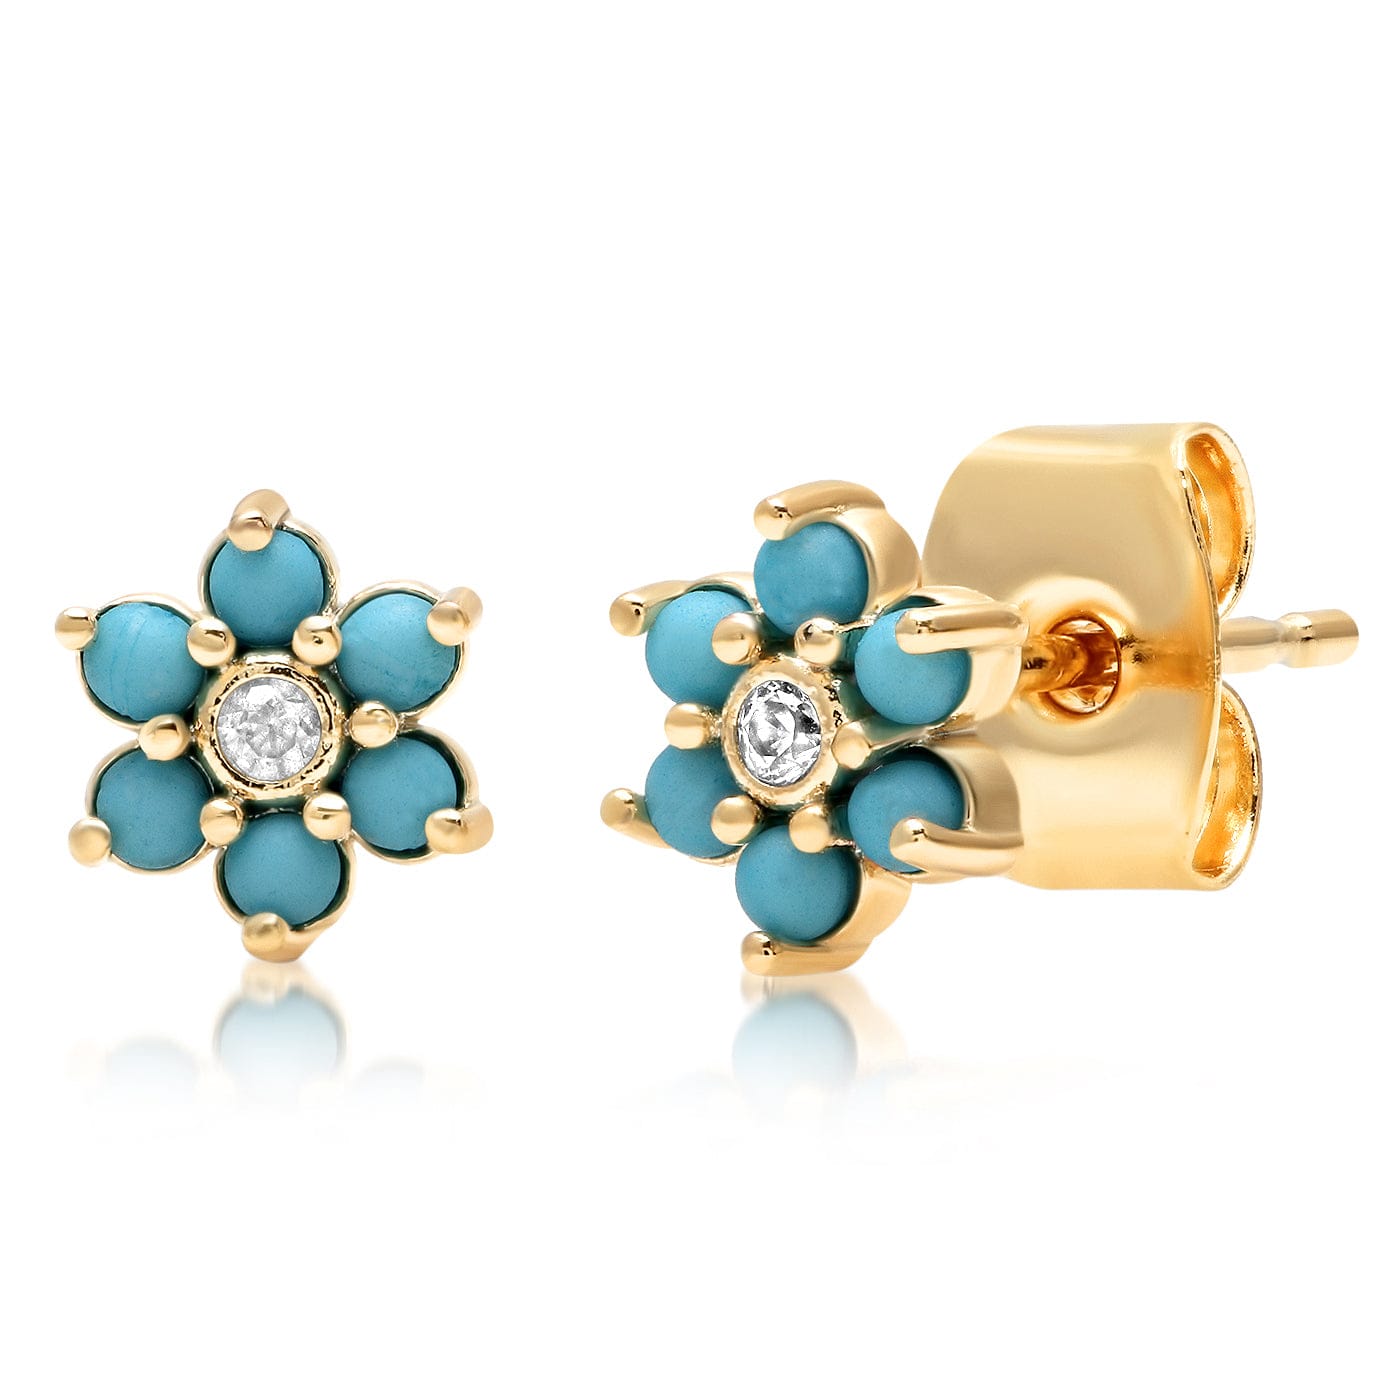 TAI JEWELRY Earrings Turquoise Flower Studs